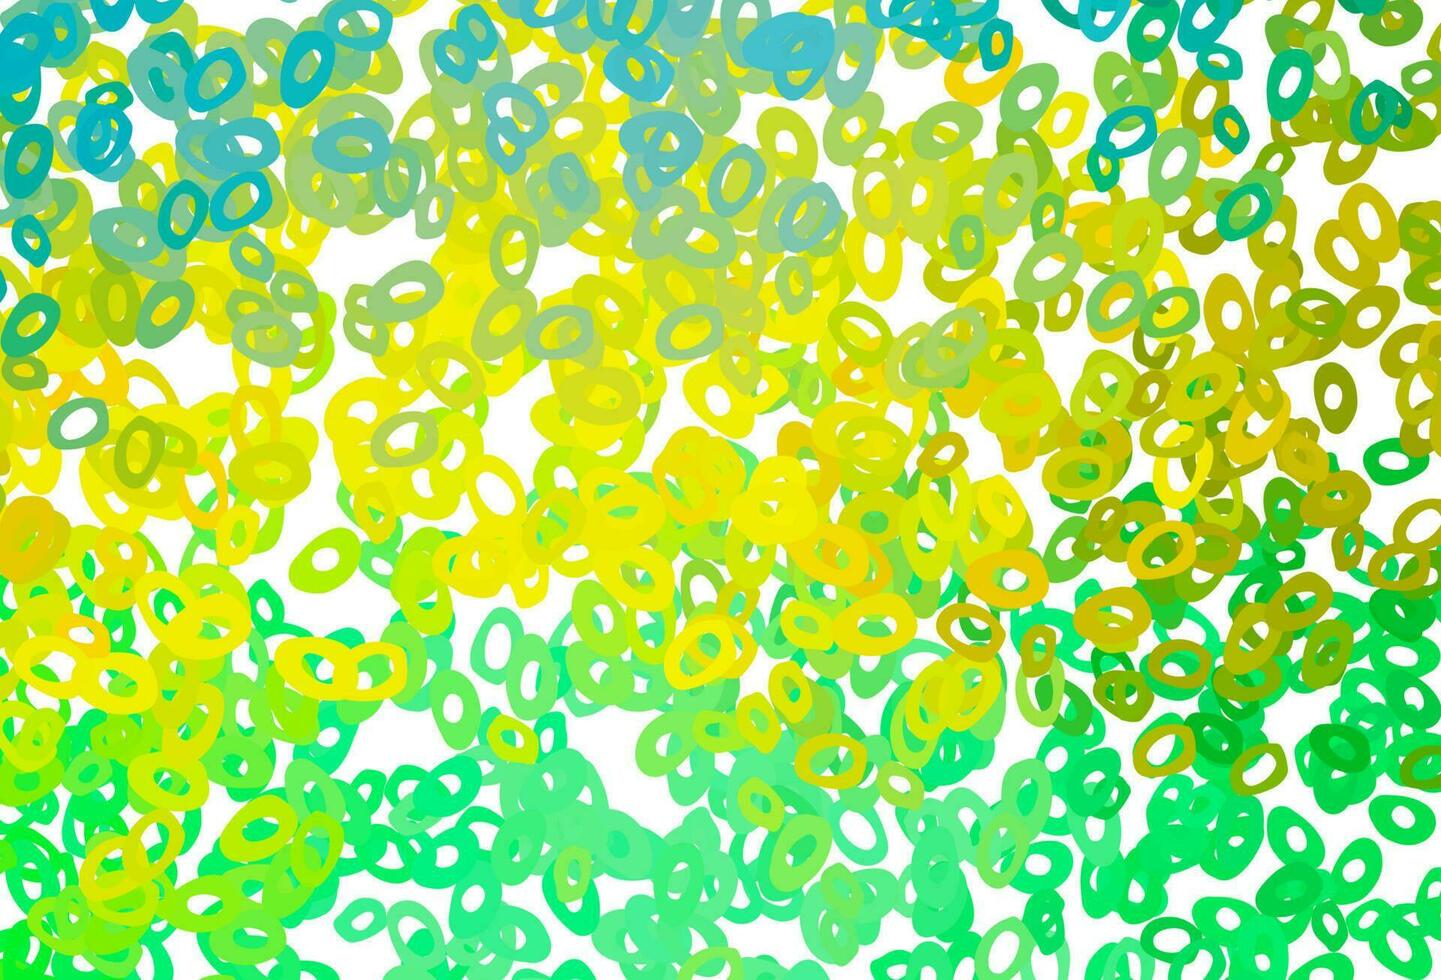 textura de vector verde claro, amarillo con discos.